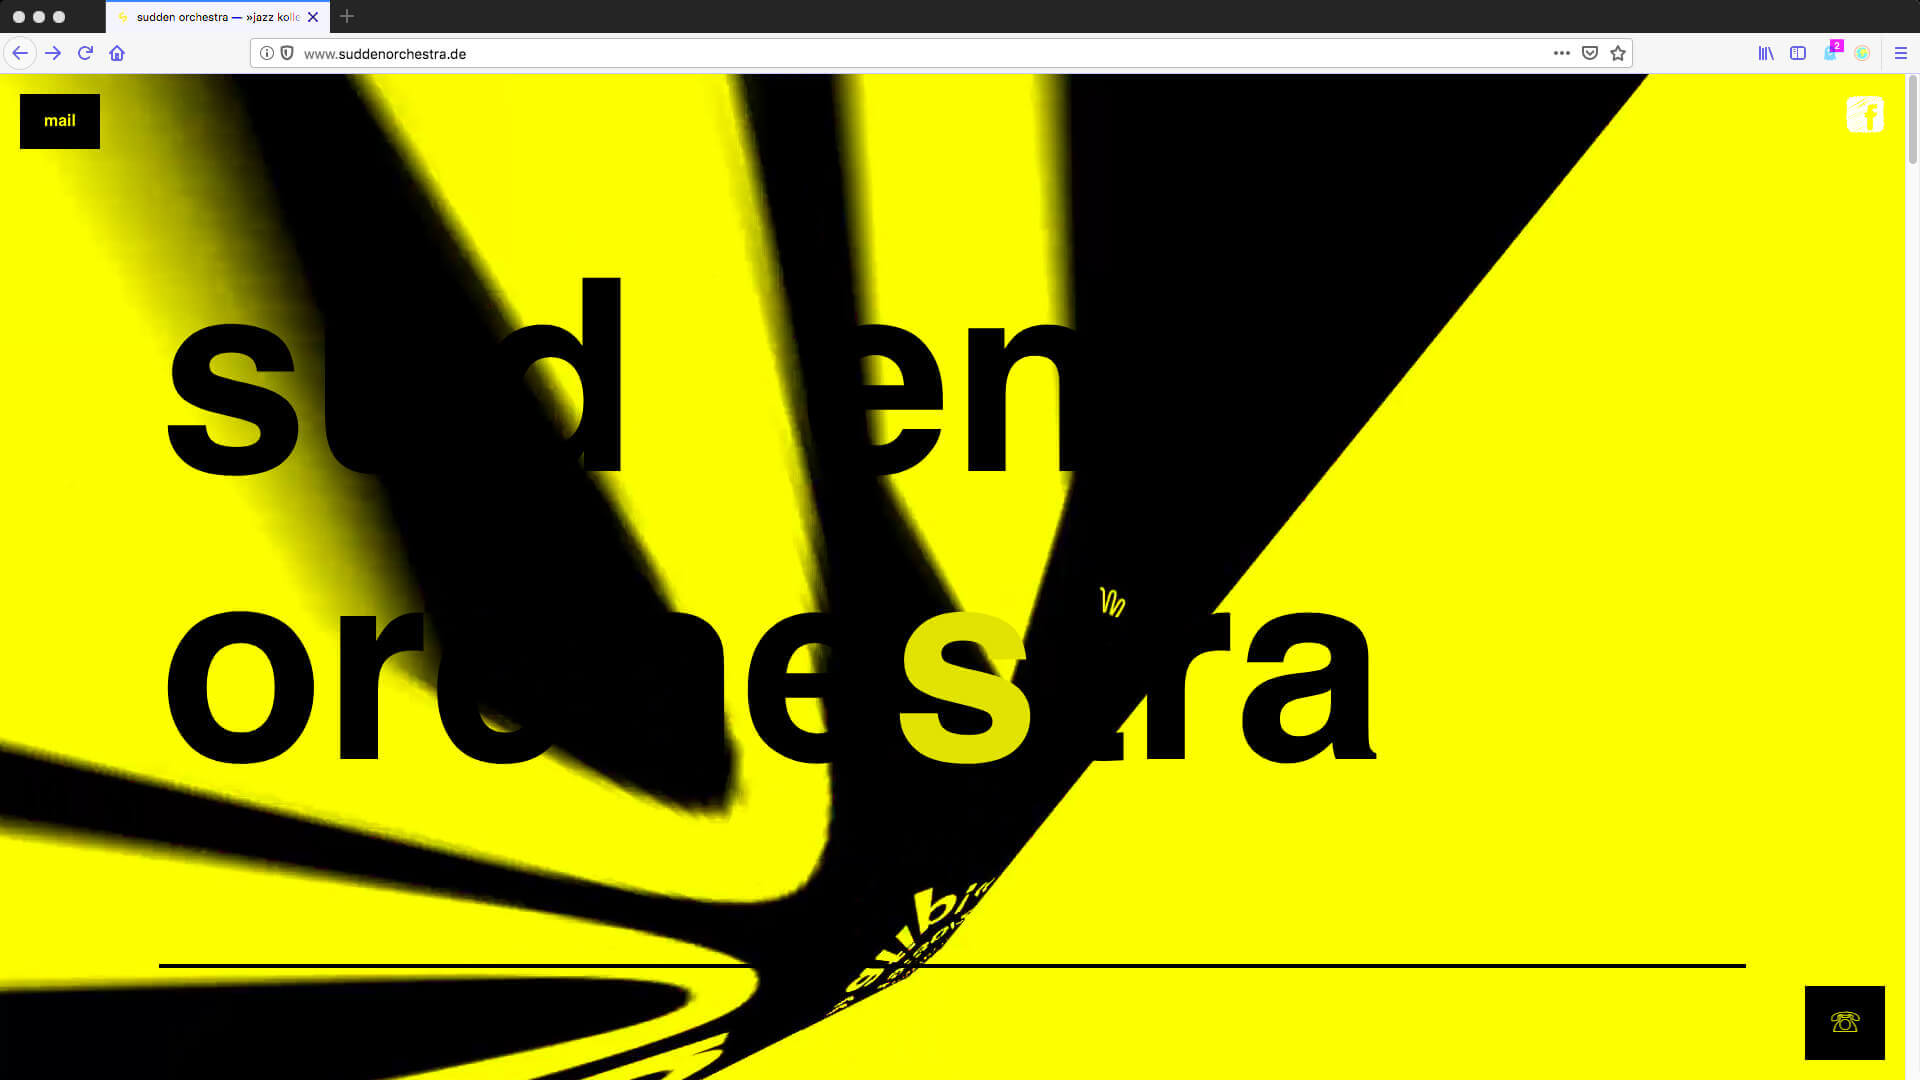 webdesign sudden orchestra